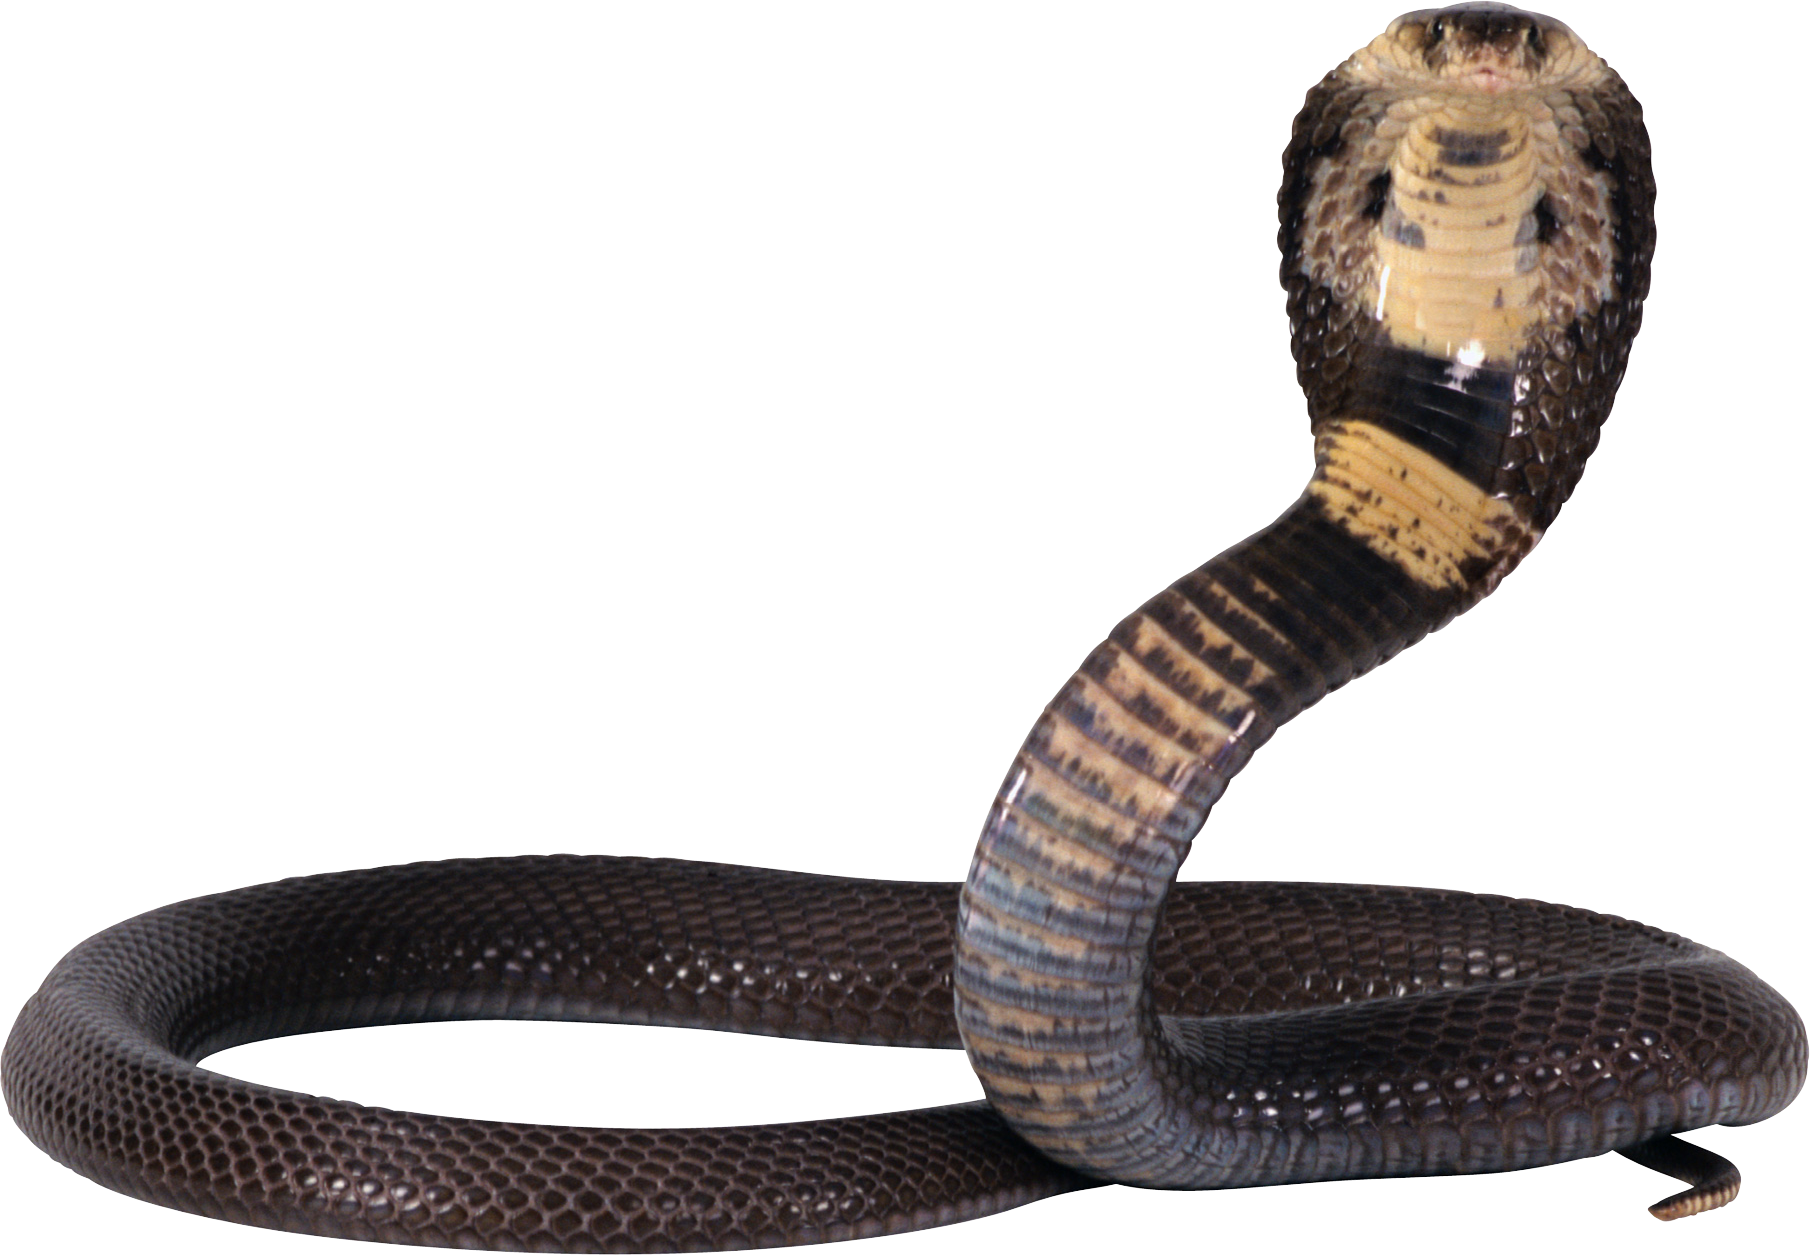 Cobra Snake Picture PNG Image